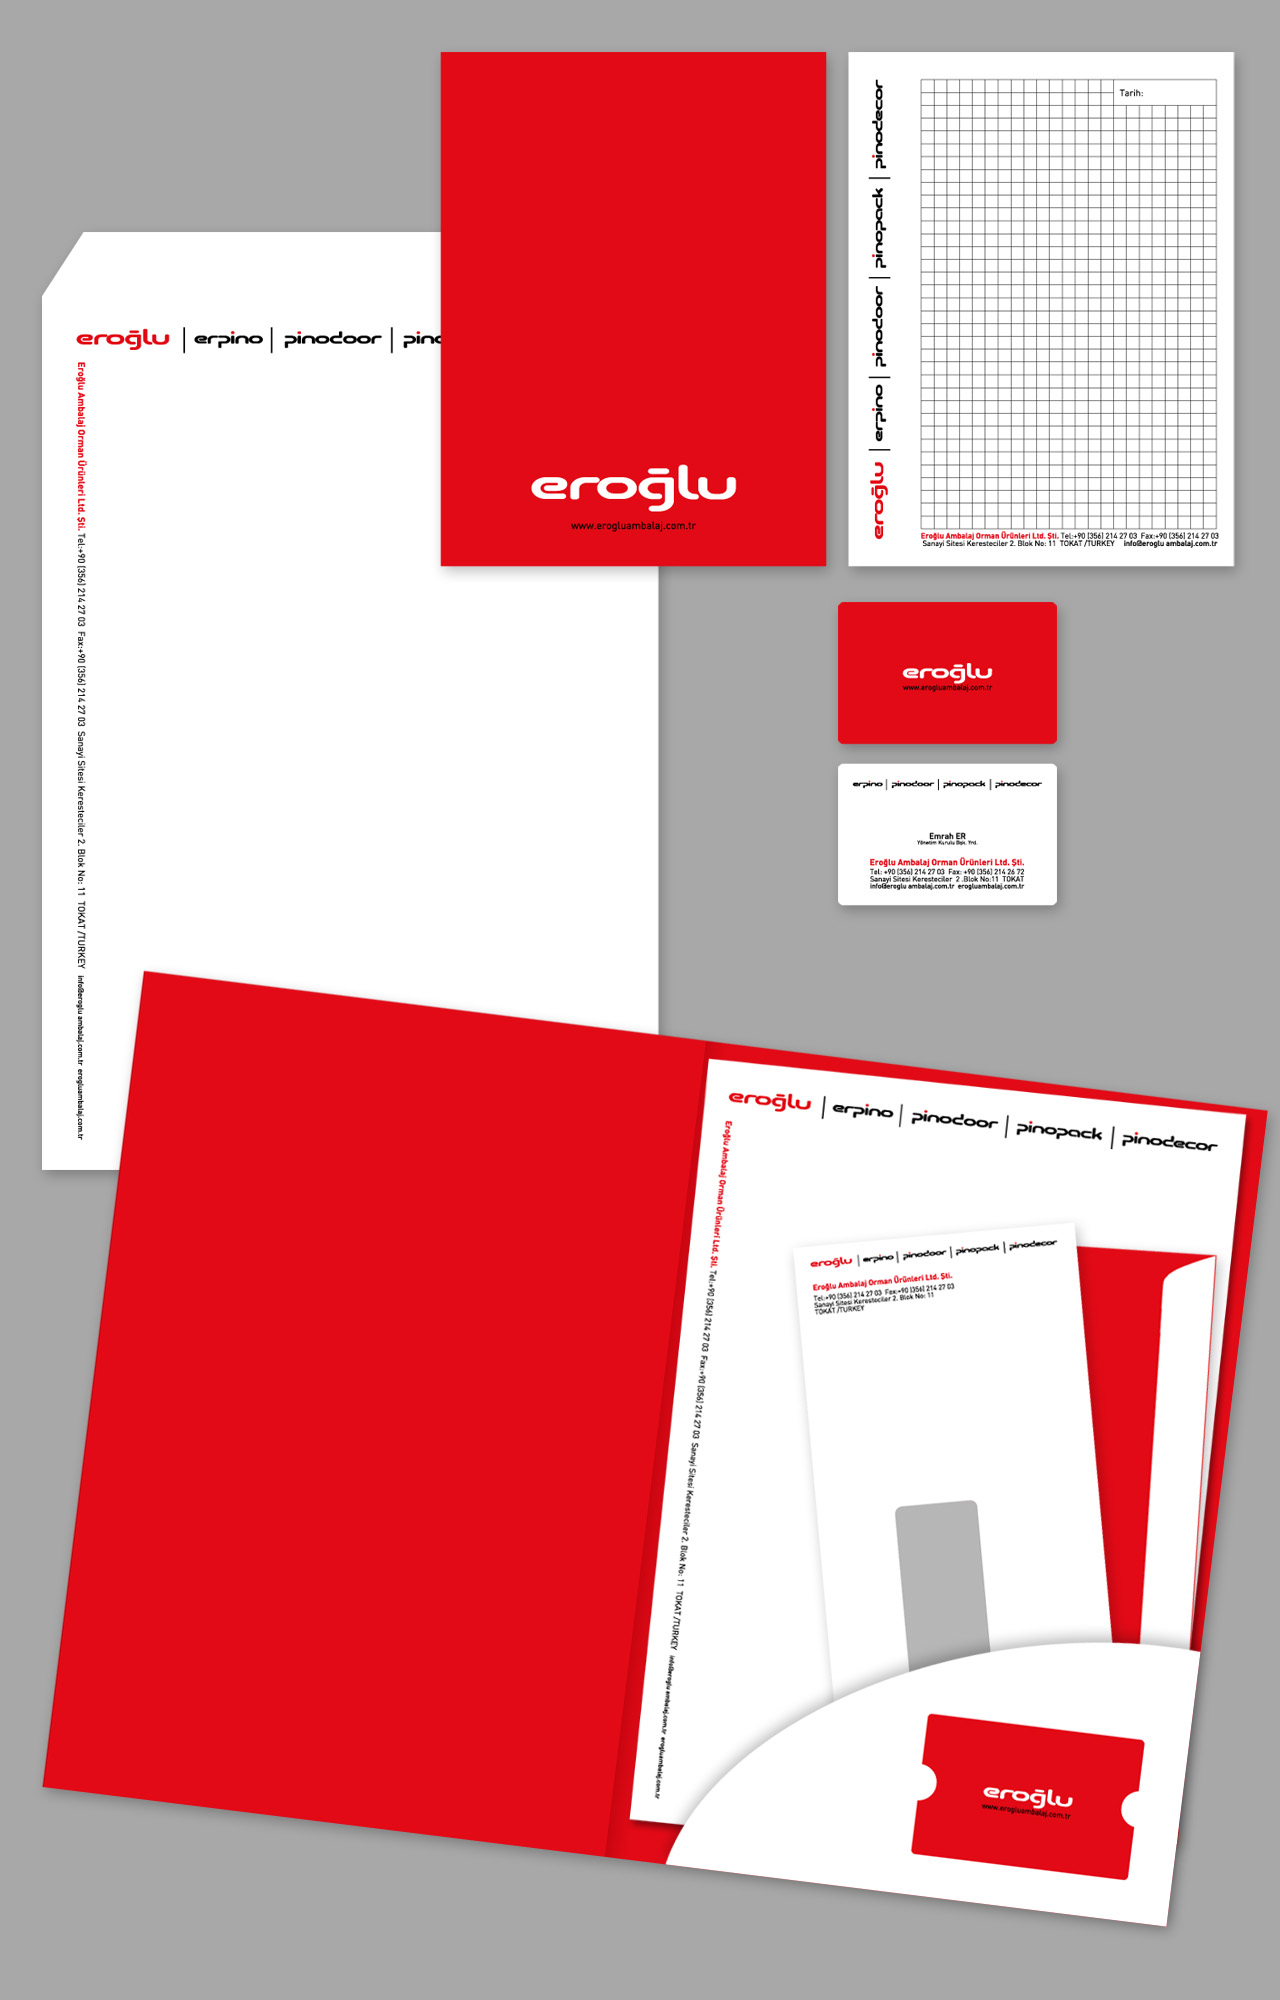 Eroglu Visual Identity Design